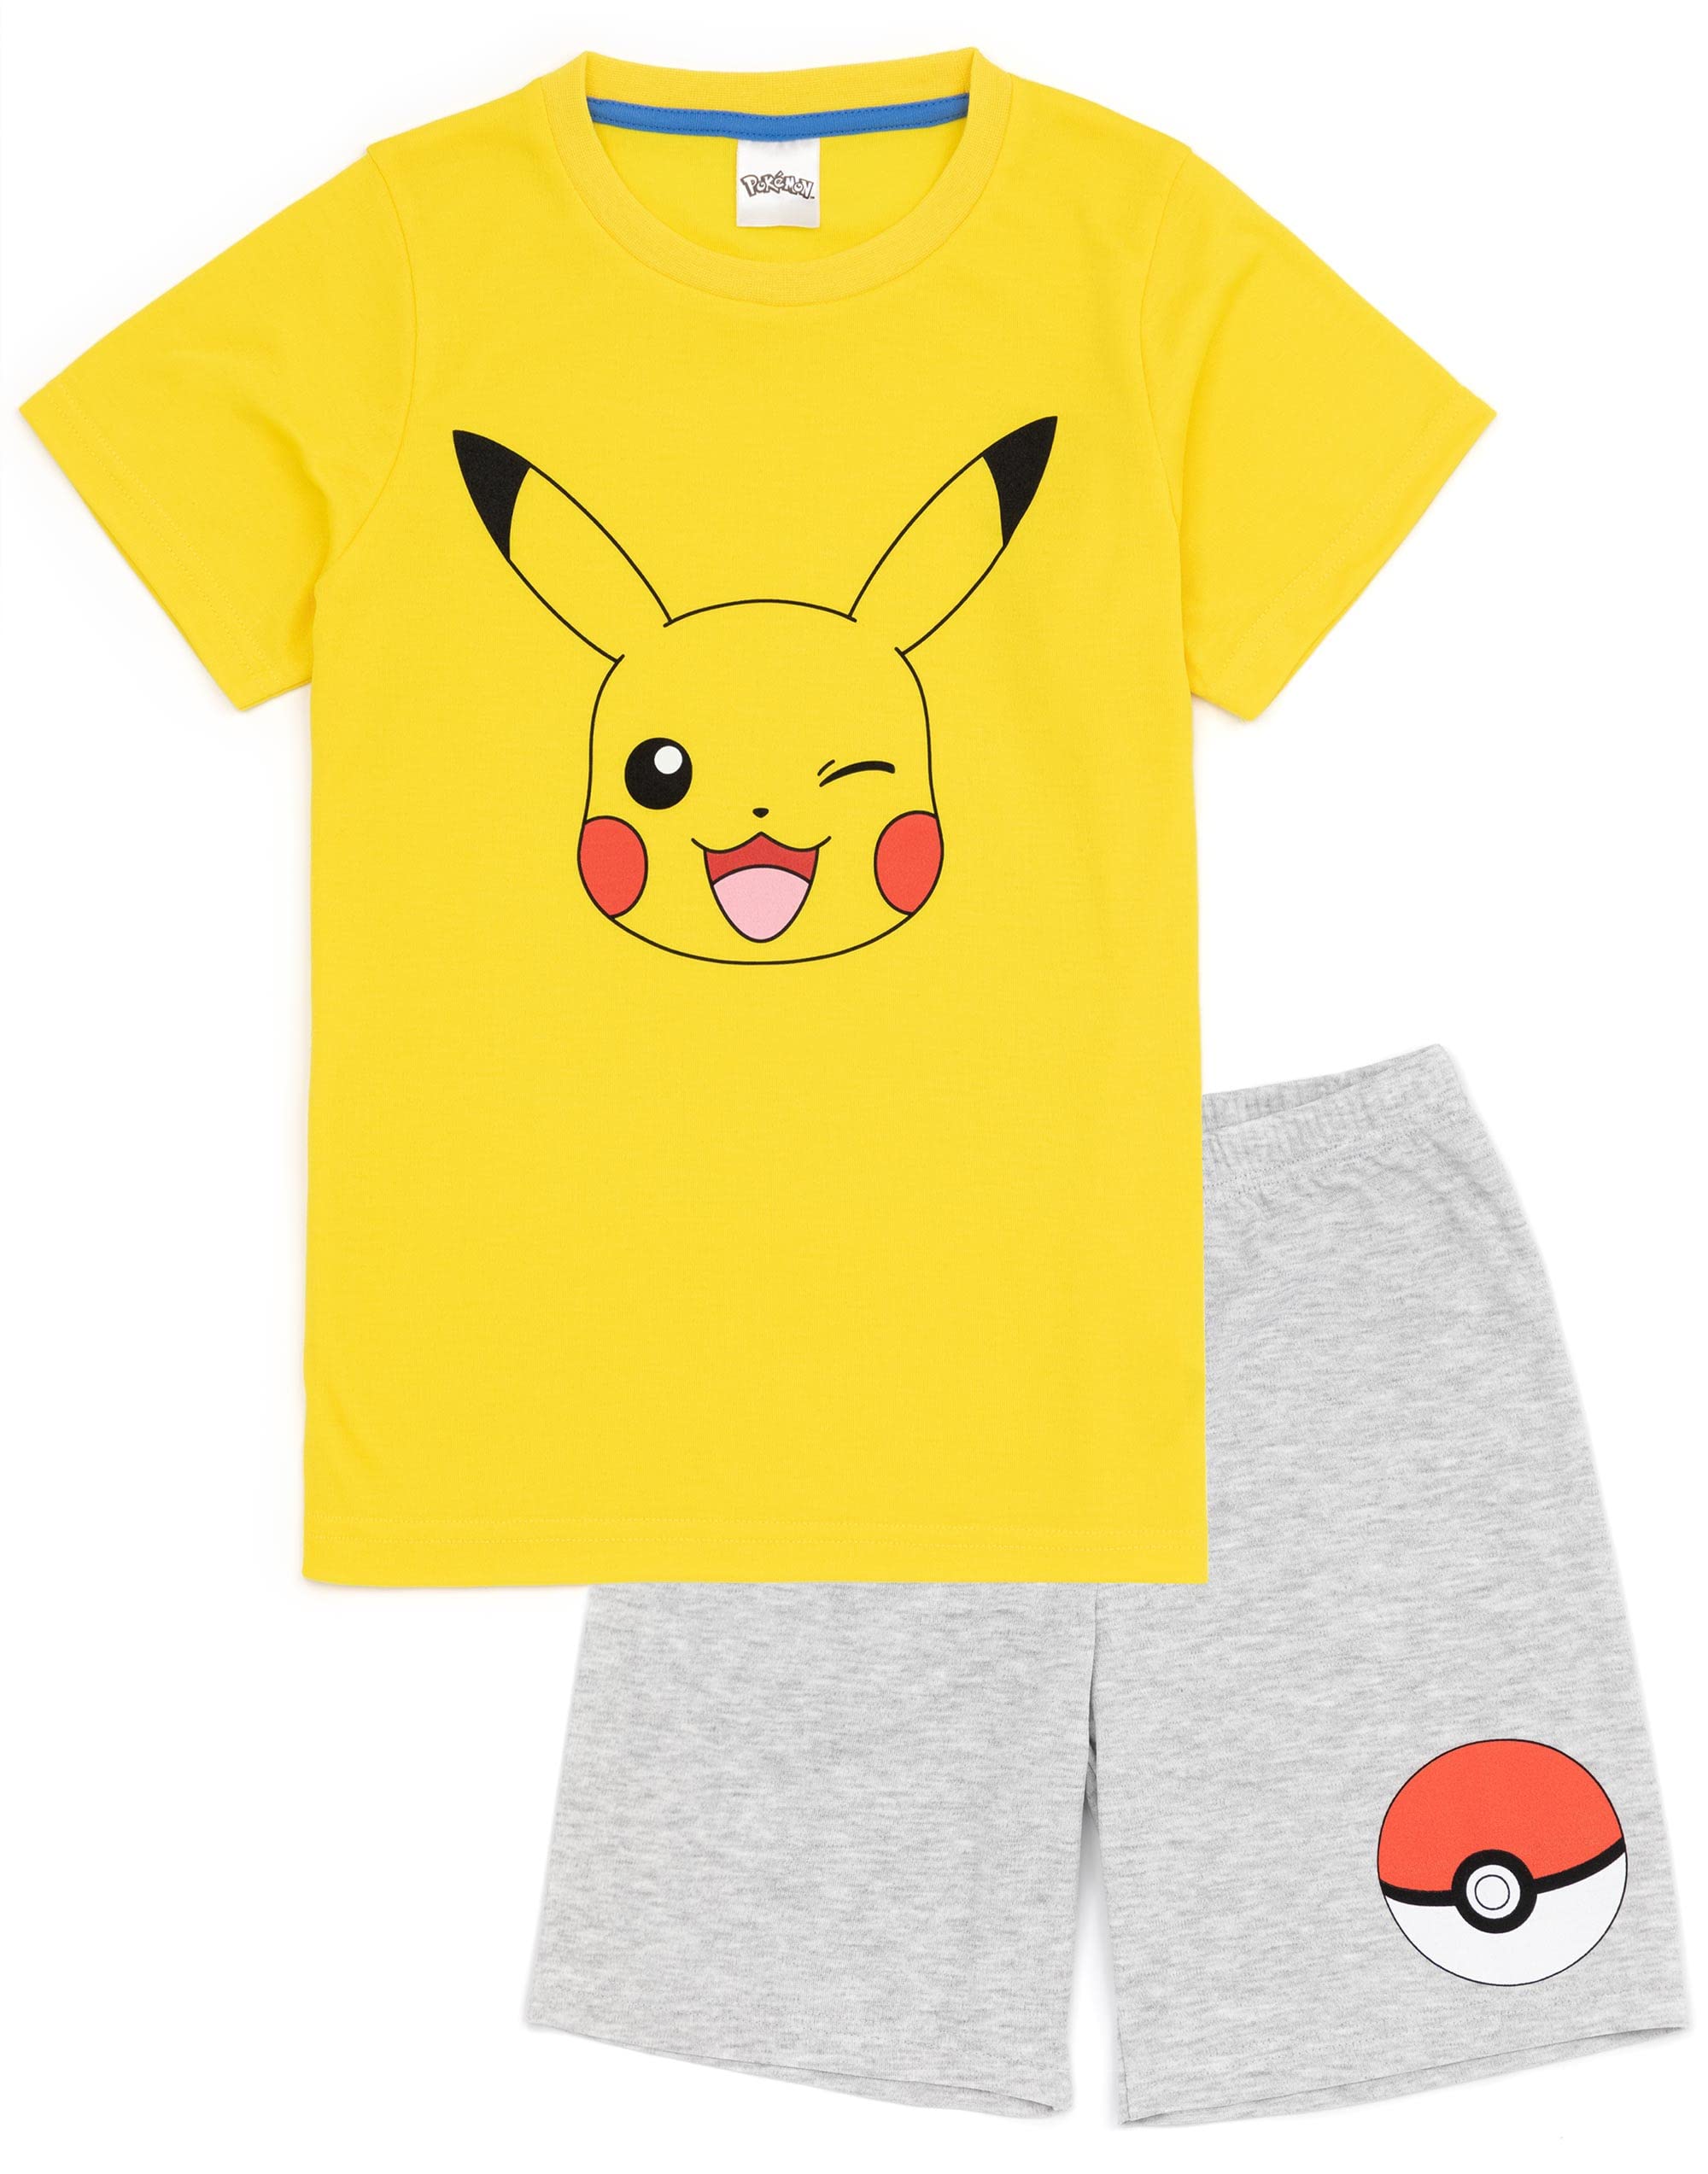 Pokemon Boys 2 Pack Pyjamas Kids Pikachu Bulbasaur Charmander Squirtle T-Shirts Shorts Set Sleepwear